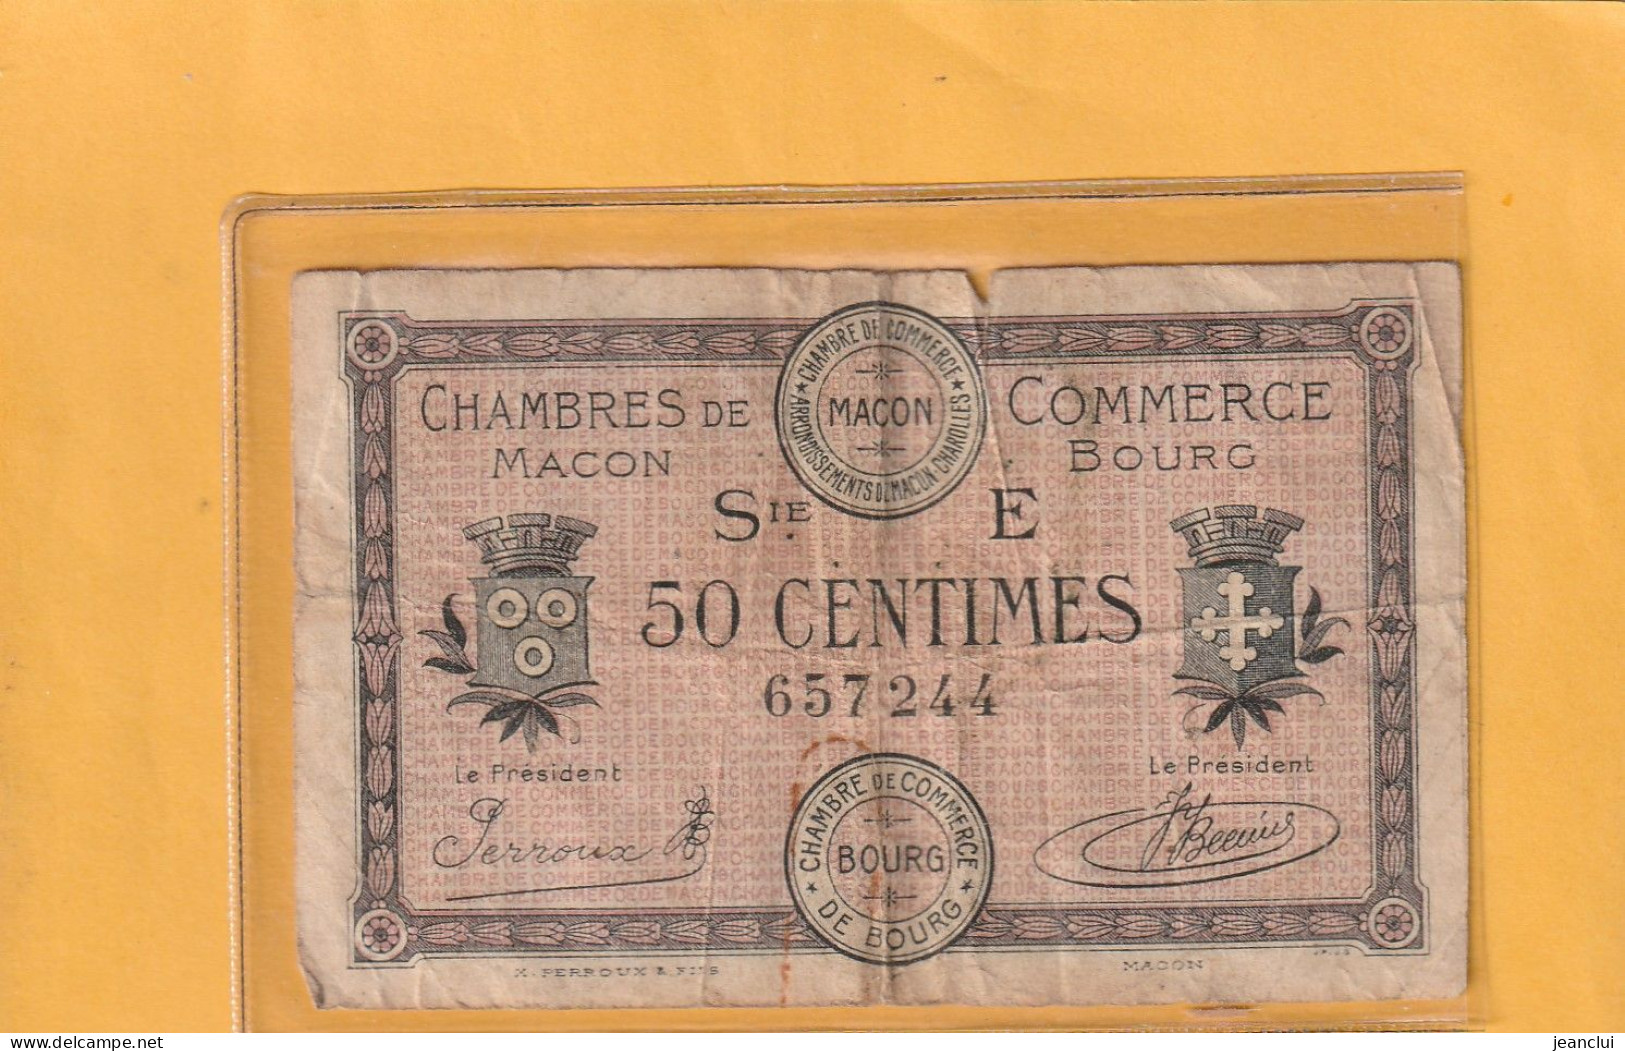 CHAMBRE DE COMMERCE DE MACON - BOURG . 50 Cts . EMISSION DU 27-4-1920 . SERIE E . N° 657244 . 2 SCANNES . BILLET USITE - Handelskammer